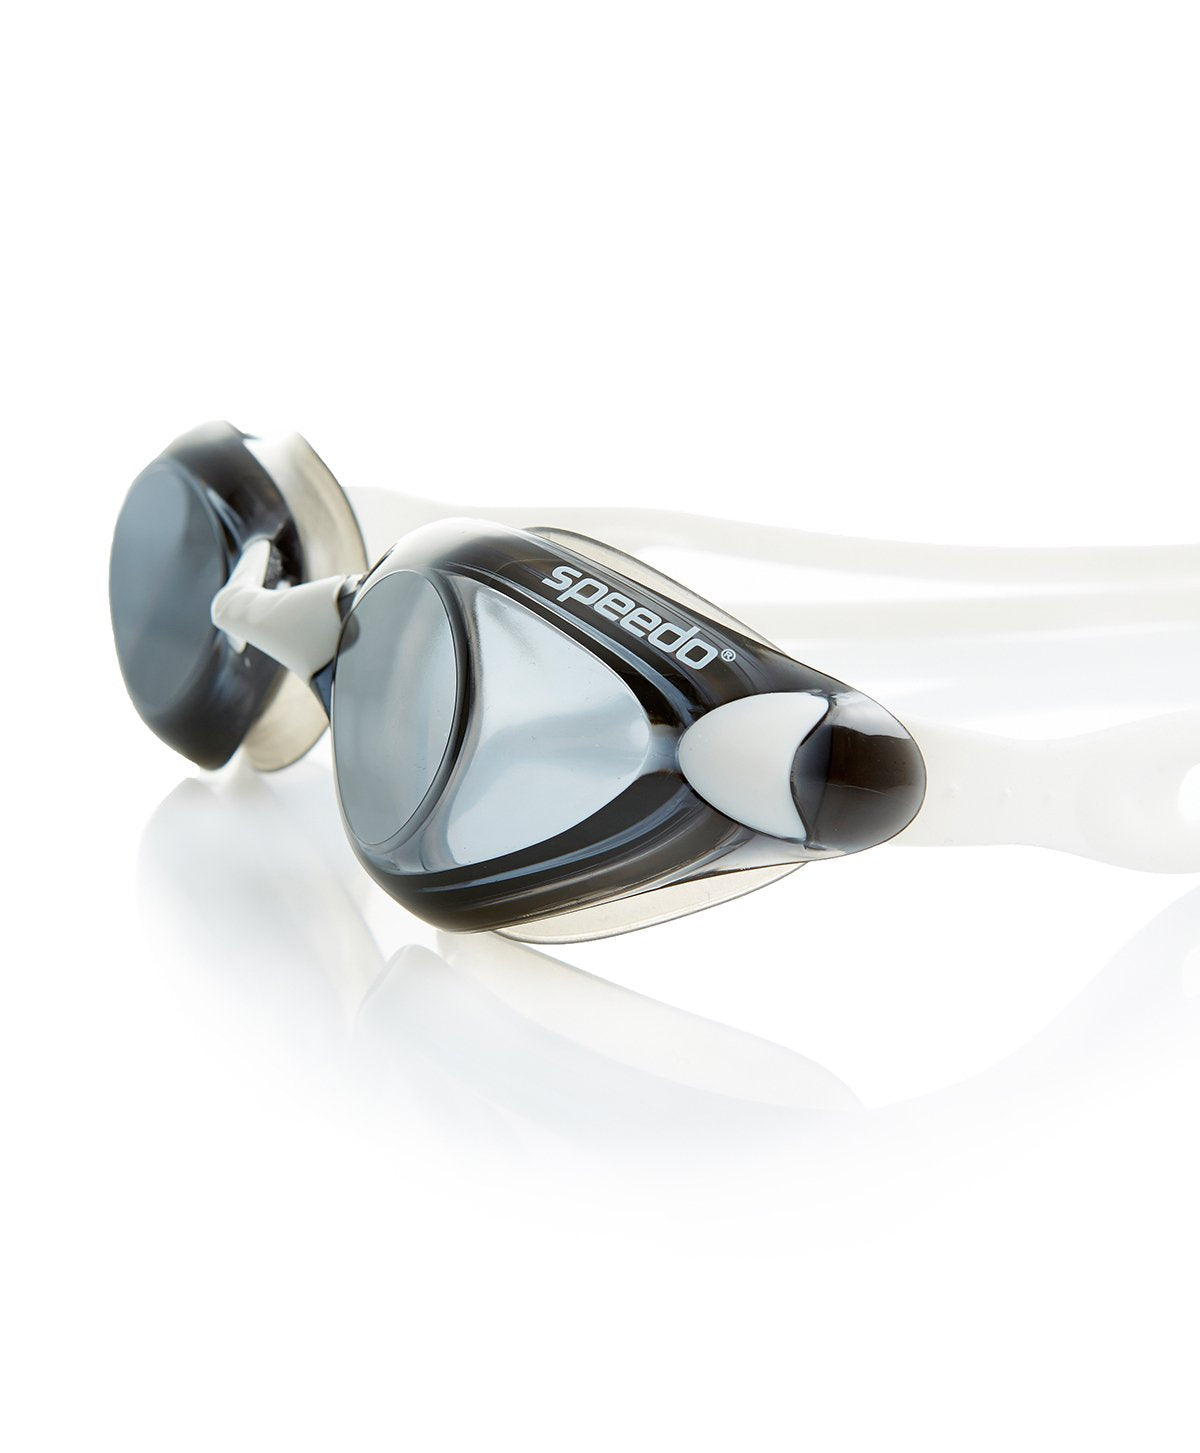 Speedo Unisex-Adult Aquapulse Goggles - White/Smoke - Best Price online Prokicksports.com